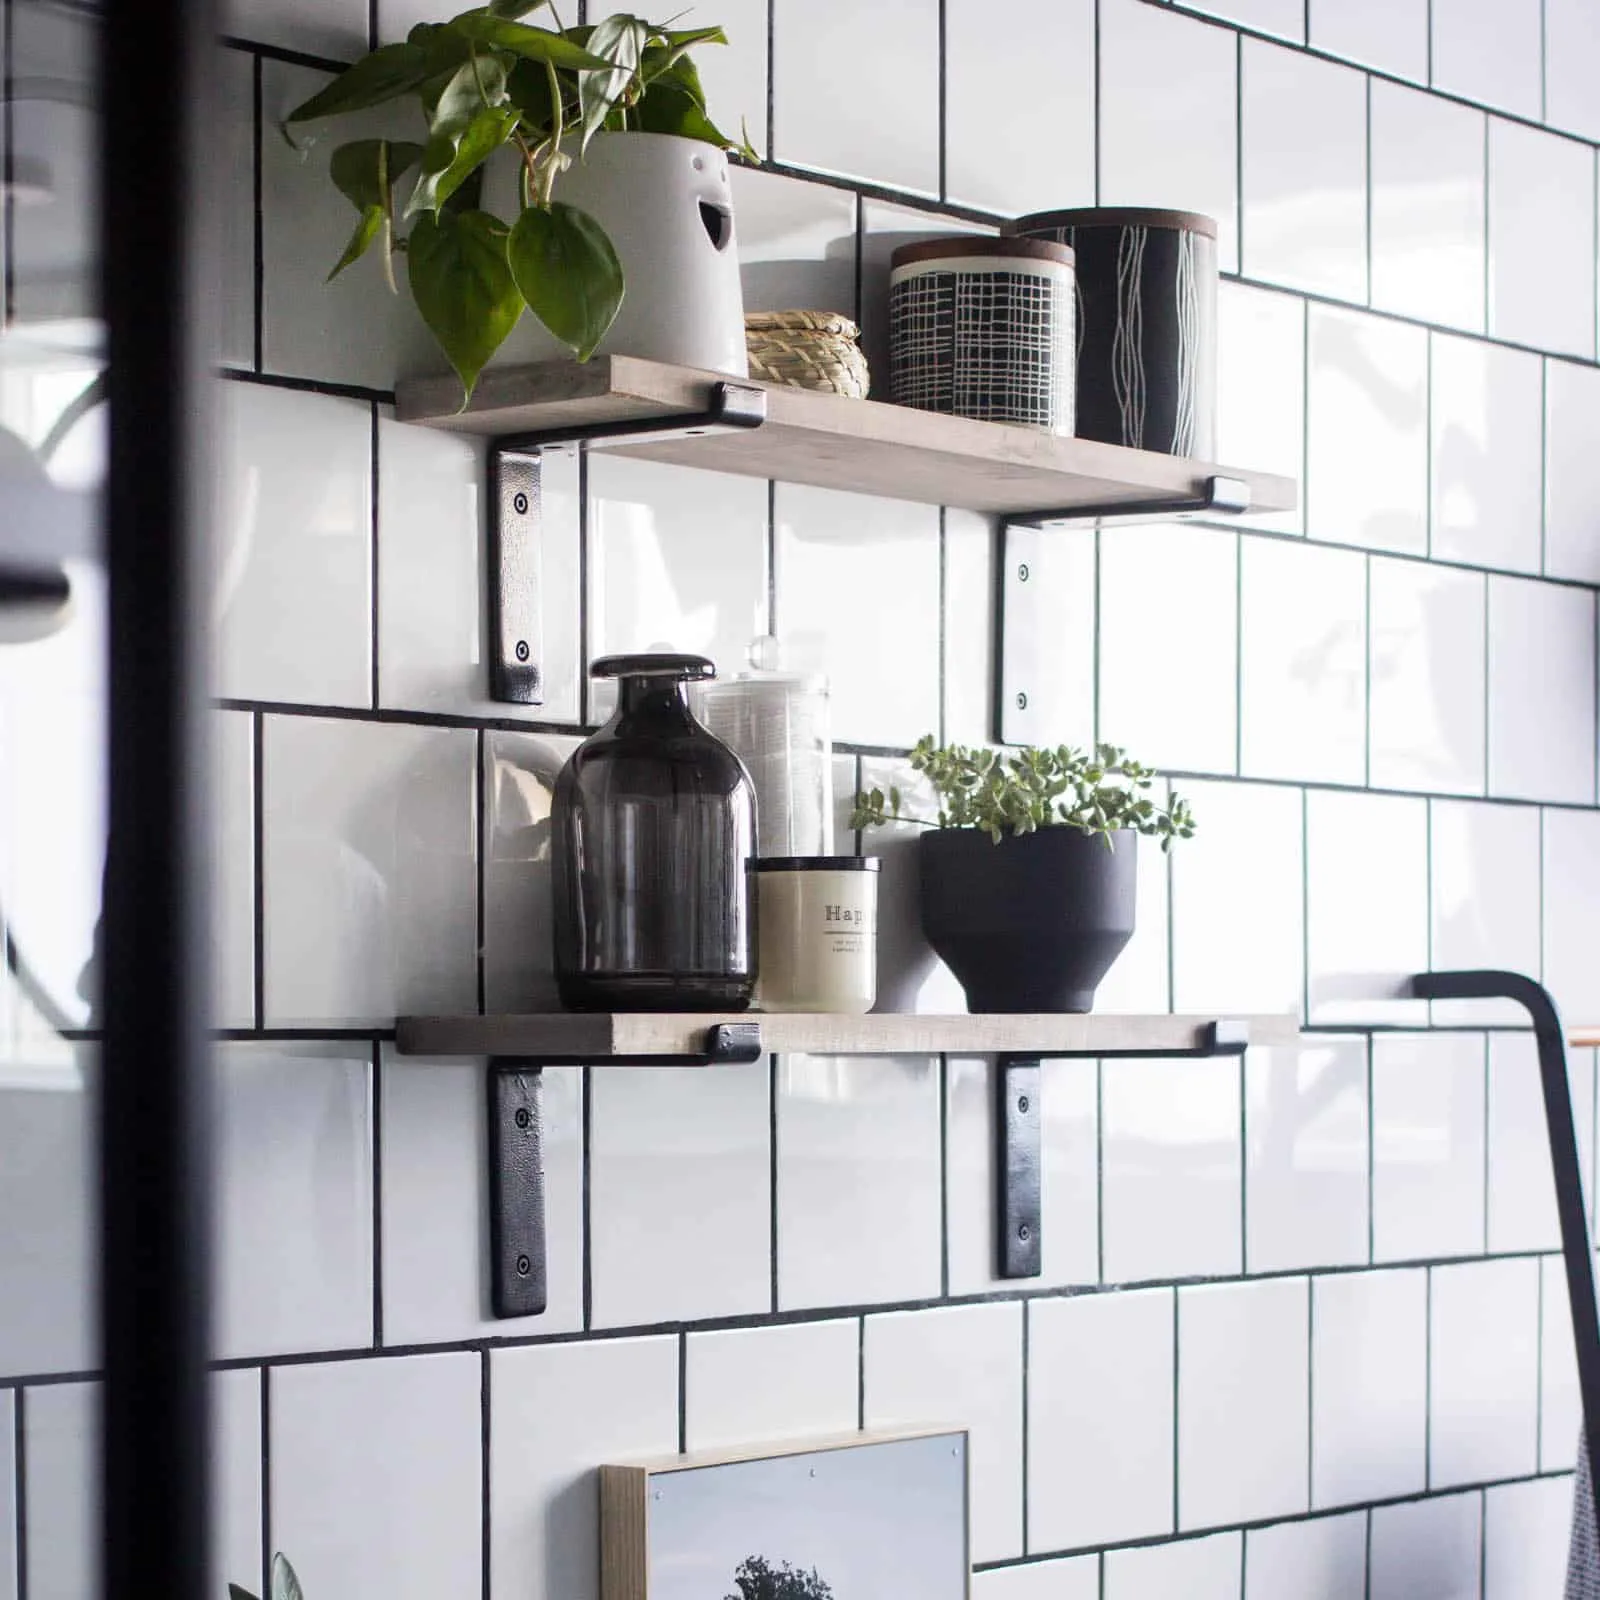 Shower wall shelf wasted space : r/DIYUK